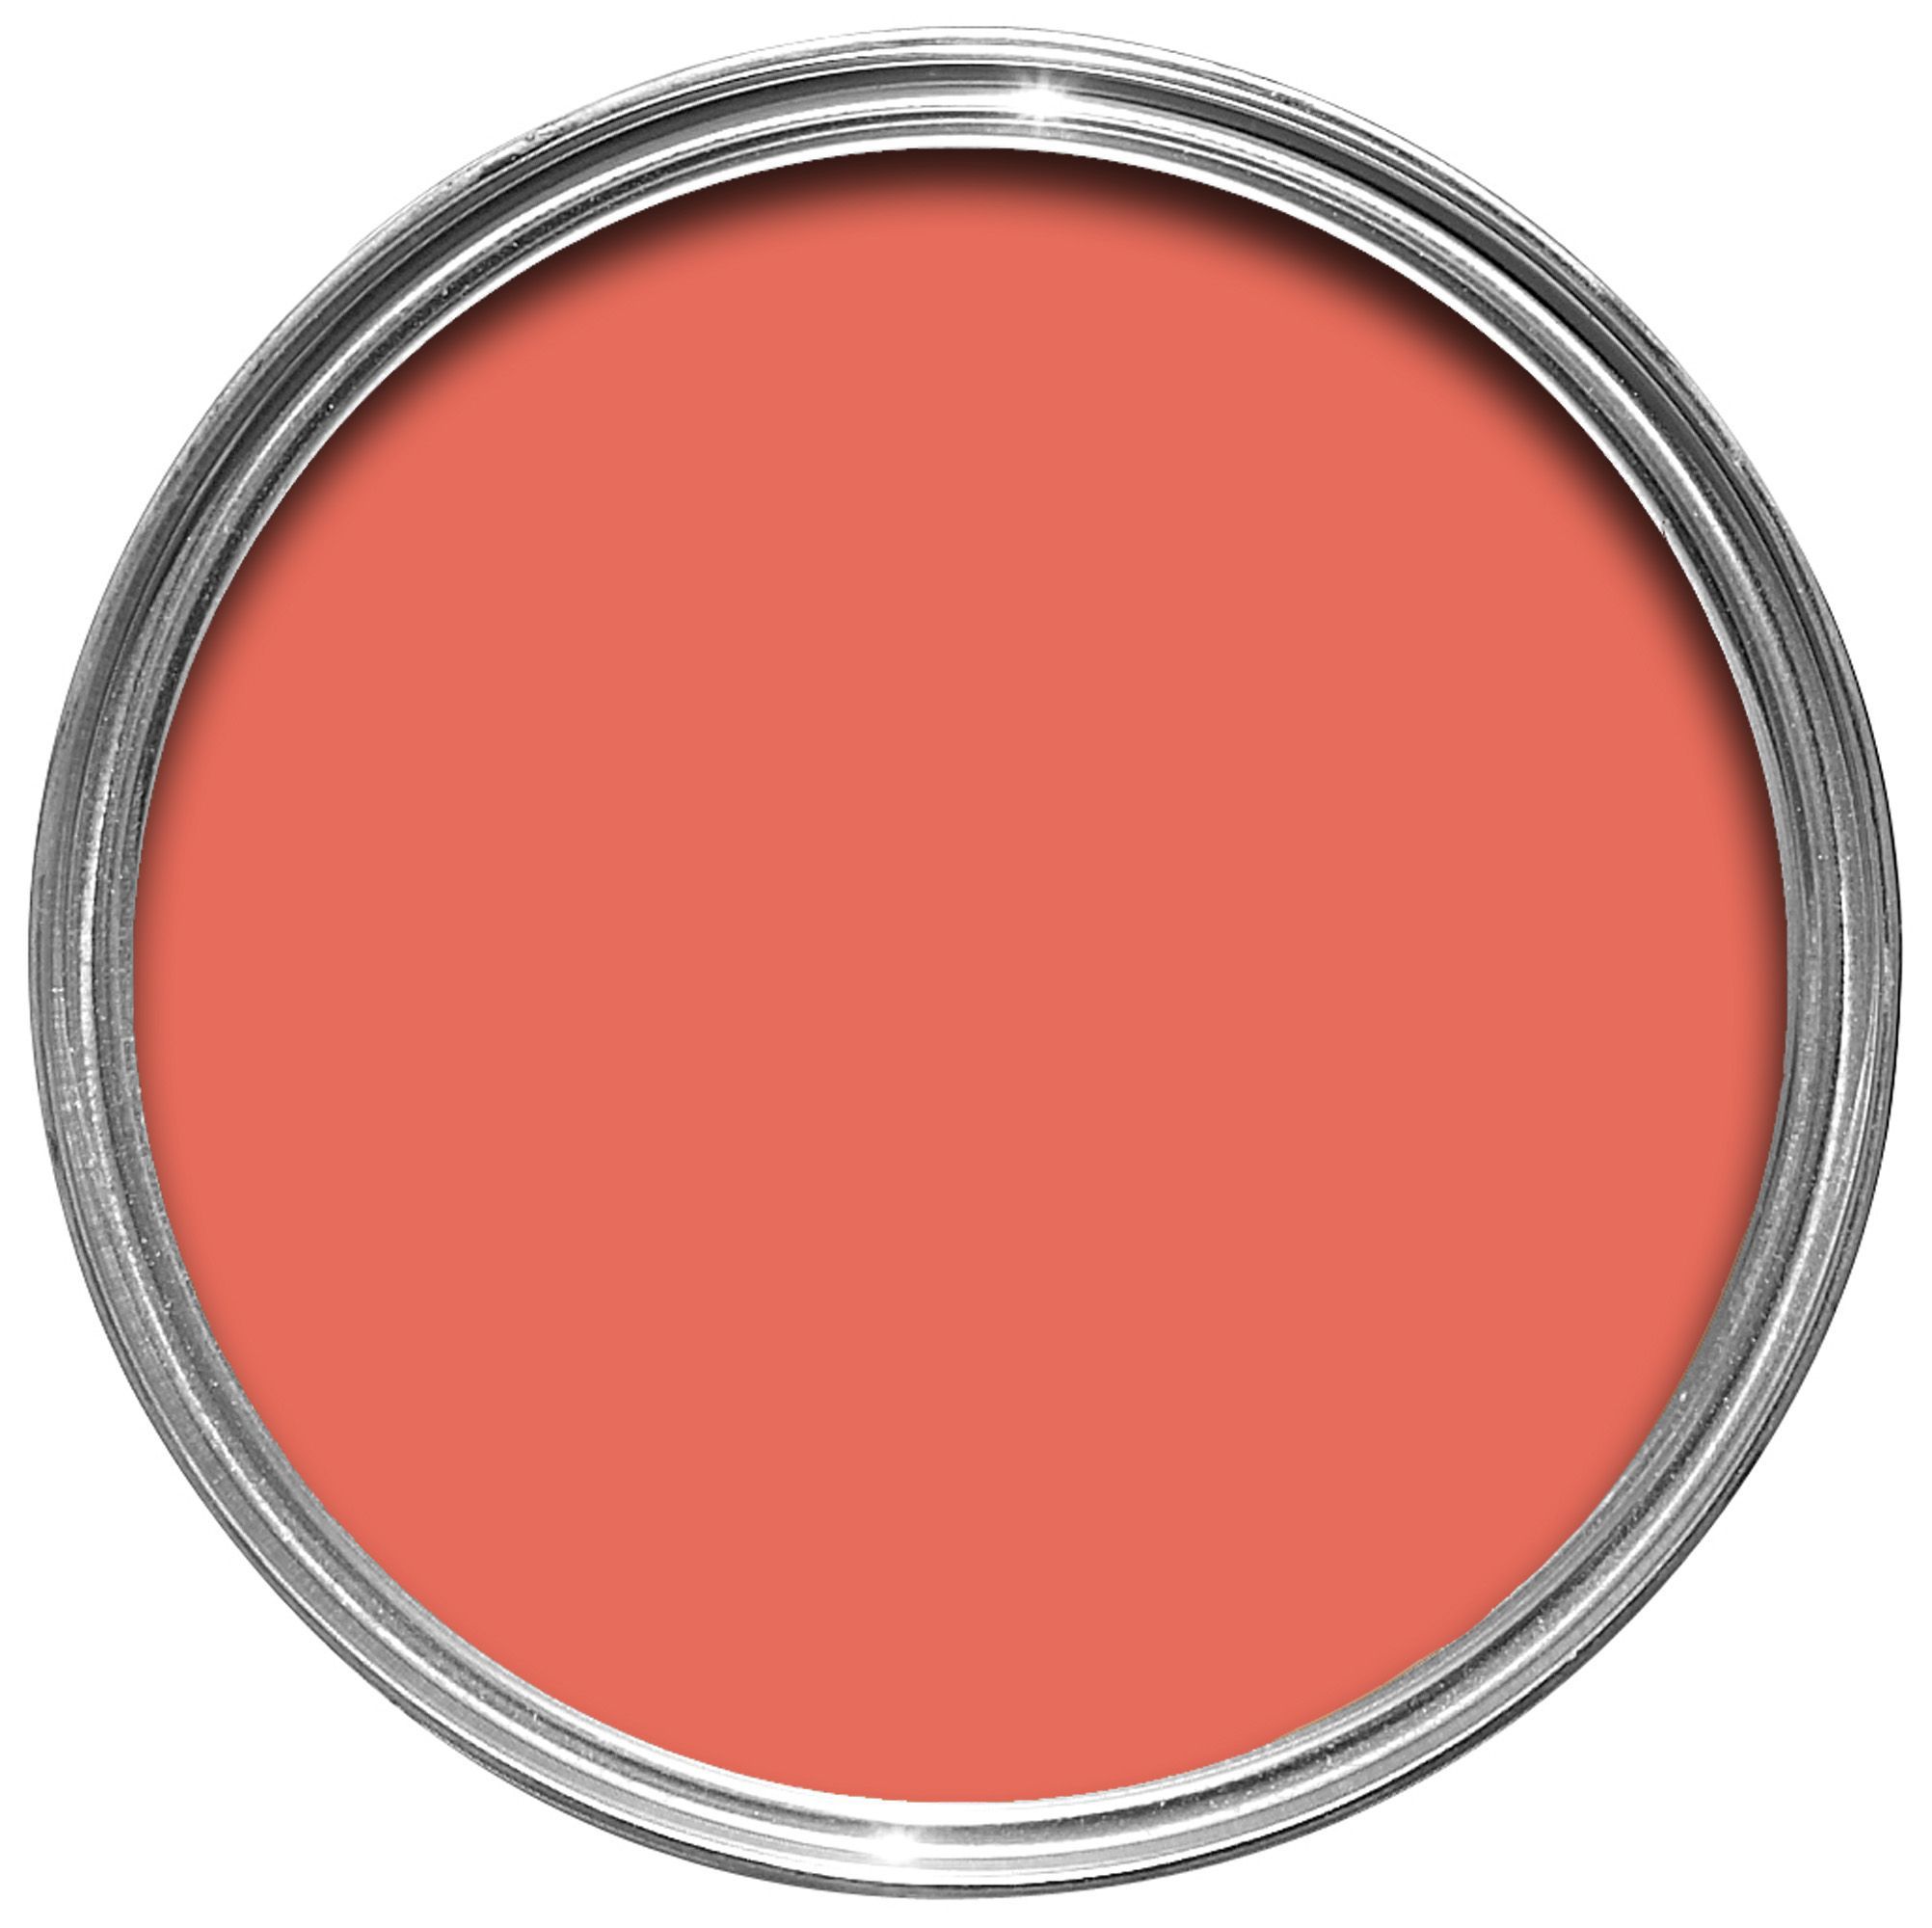 Rust-Oleum Painter's touch Bright orange Gloss Multi-surface paint, 250ml